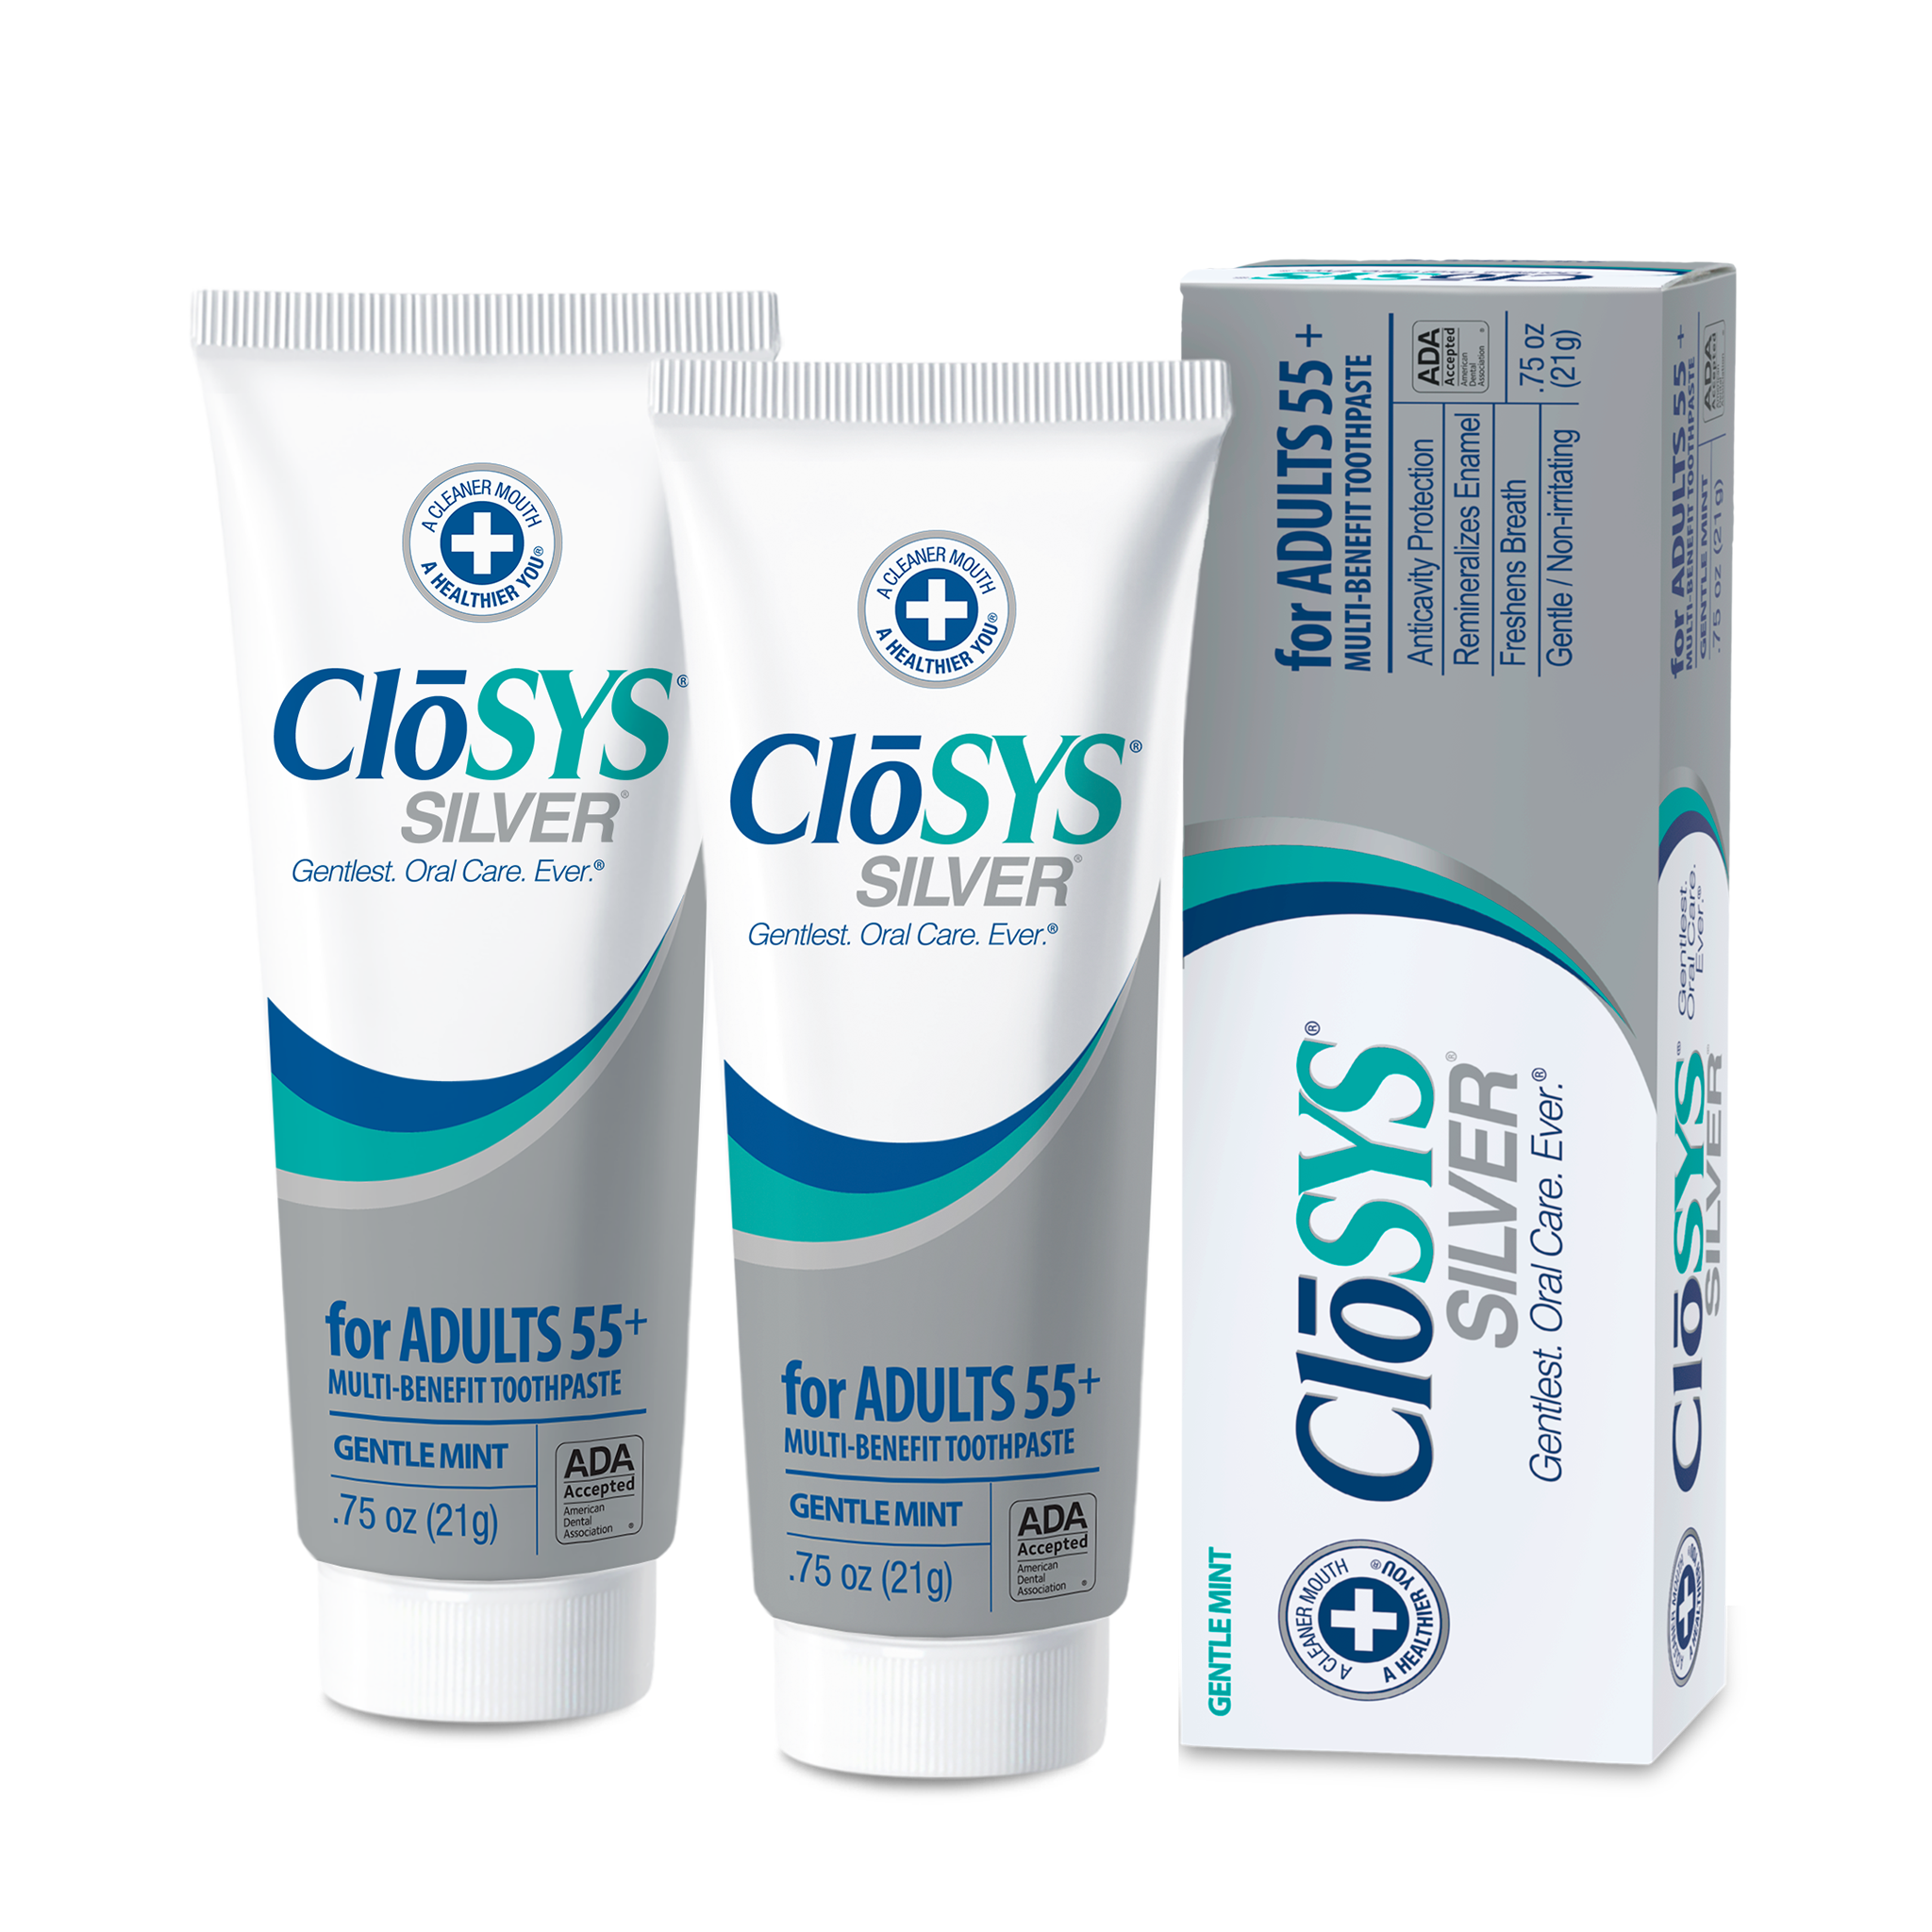 CloSYS Silver Toothpaste